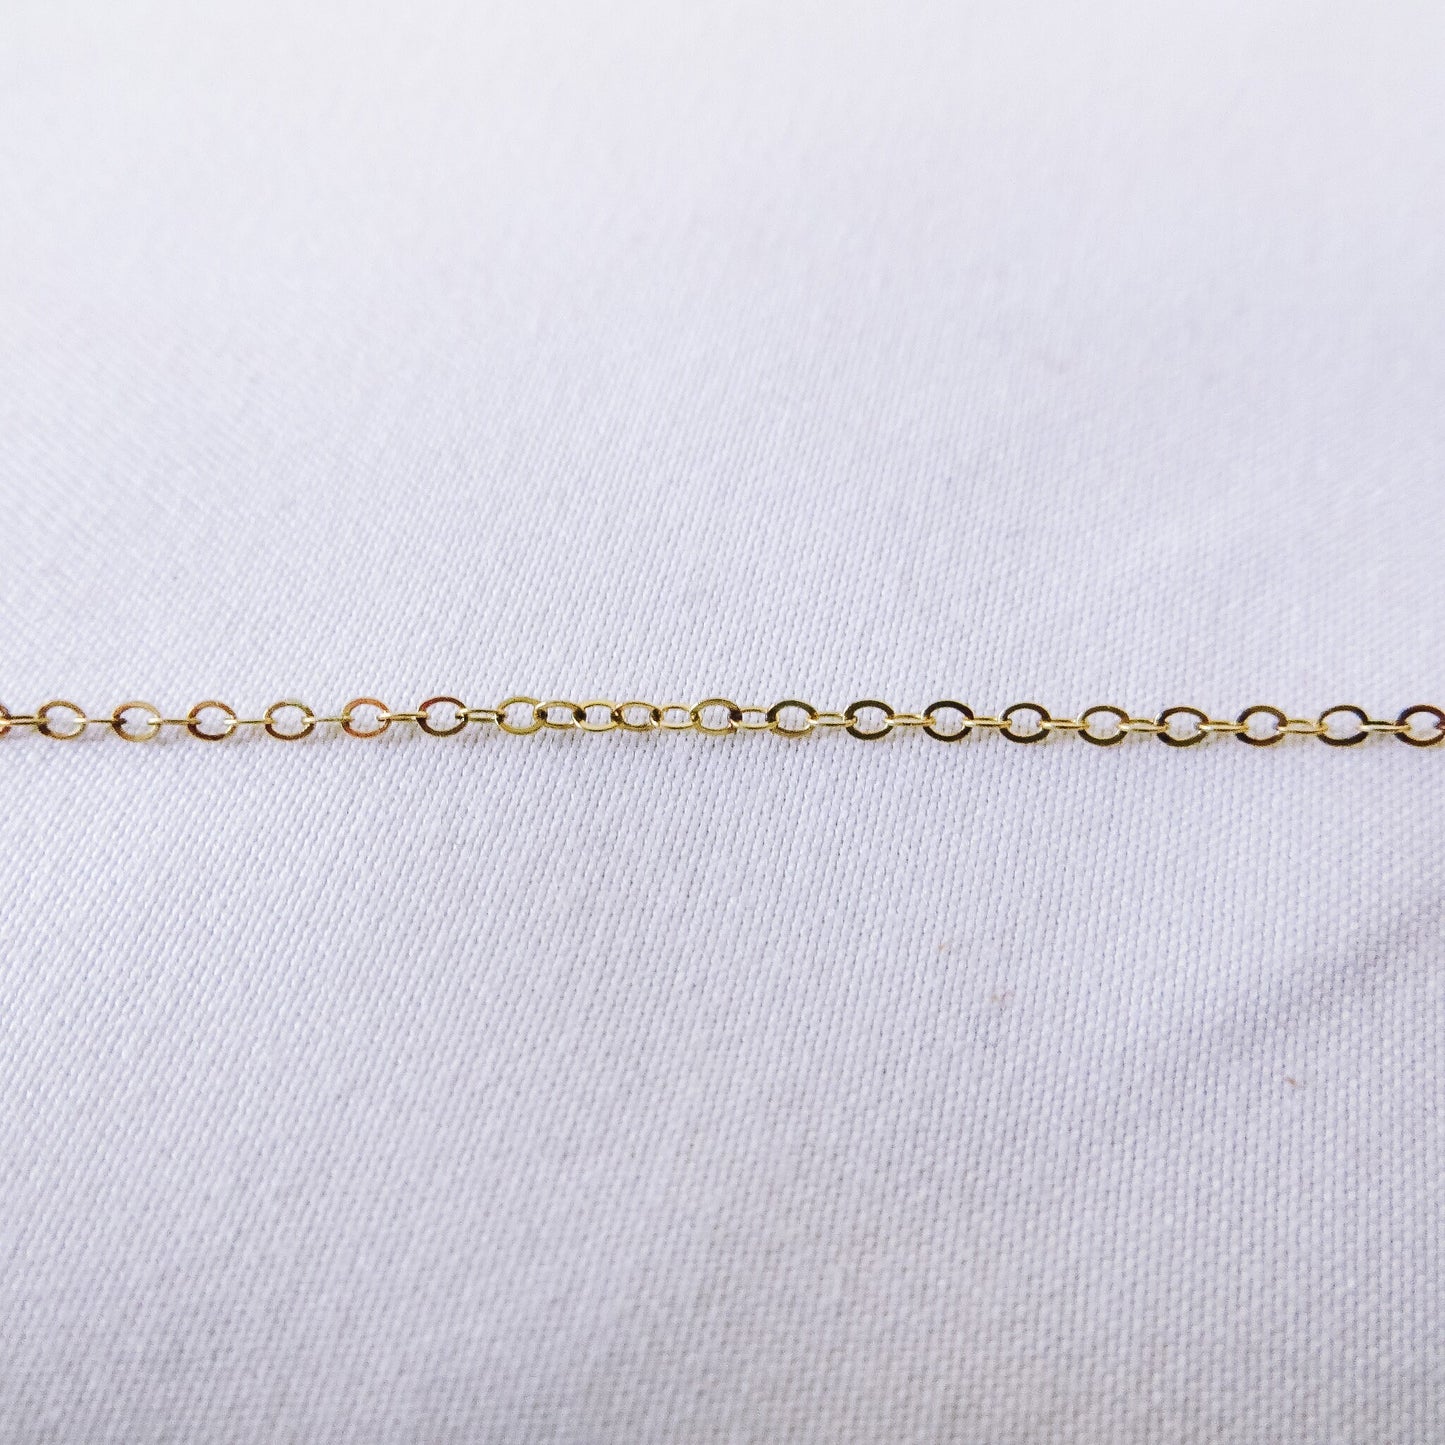 Vintage 14k Gold Filled Cut Out Heart Necklace, Simplistic Vintage Heart Necklace